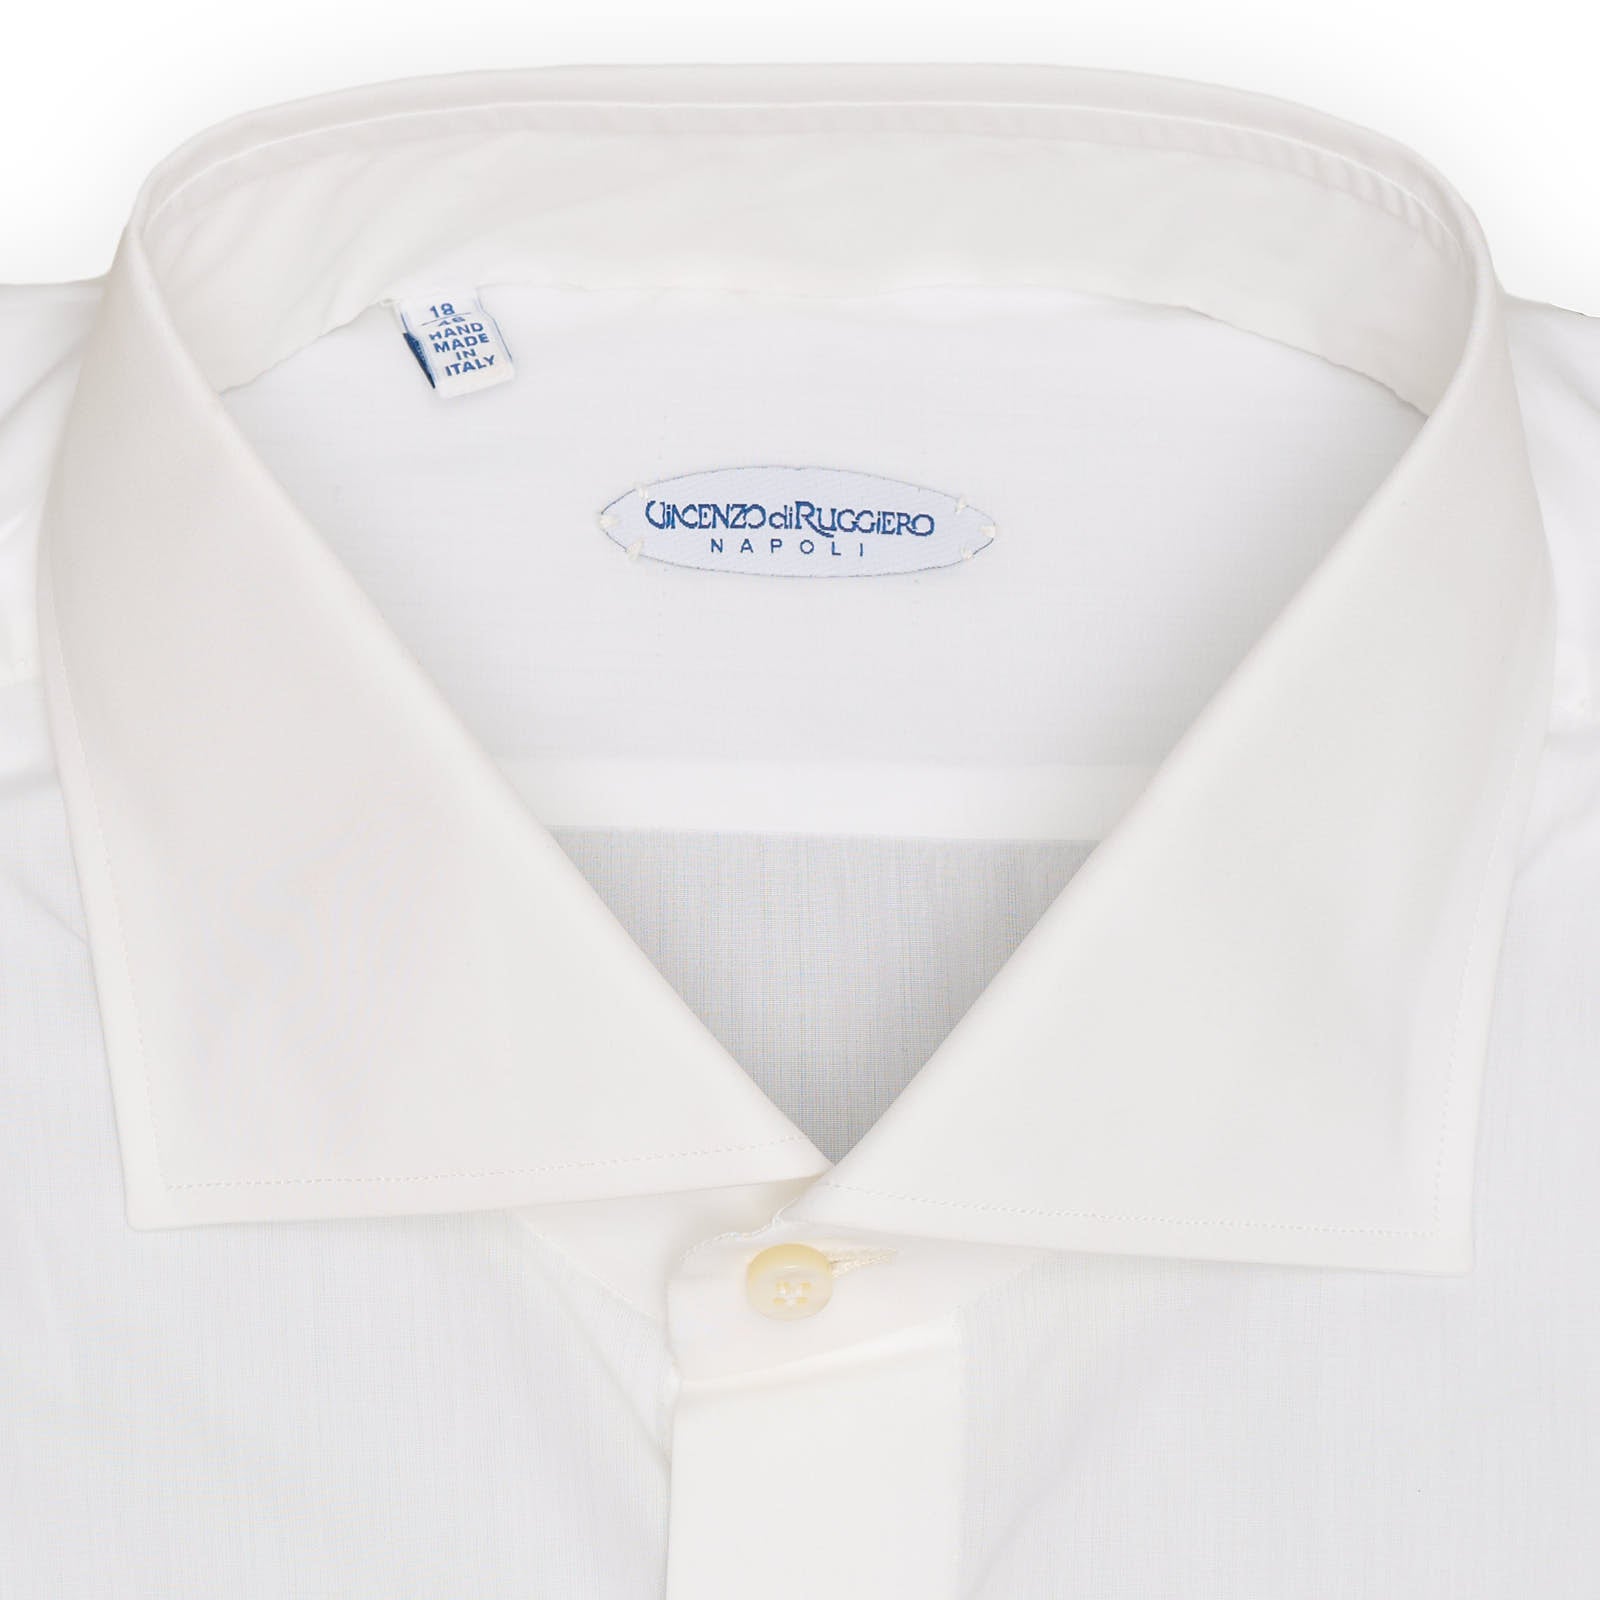 VINCENZO DI RUGGIERO Handmade White Cotton Dress Shirt EU 46 NEW US 18